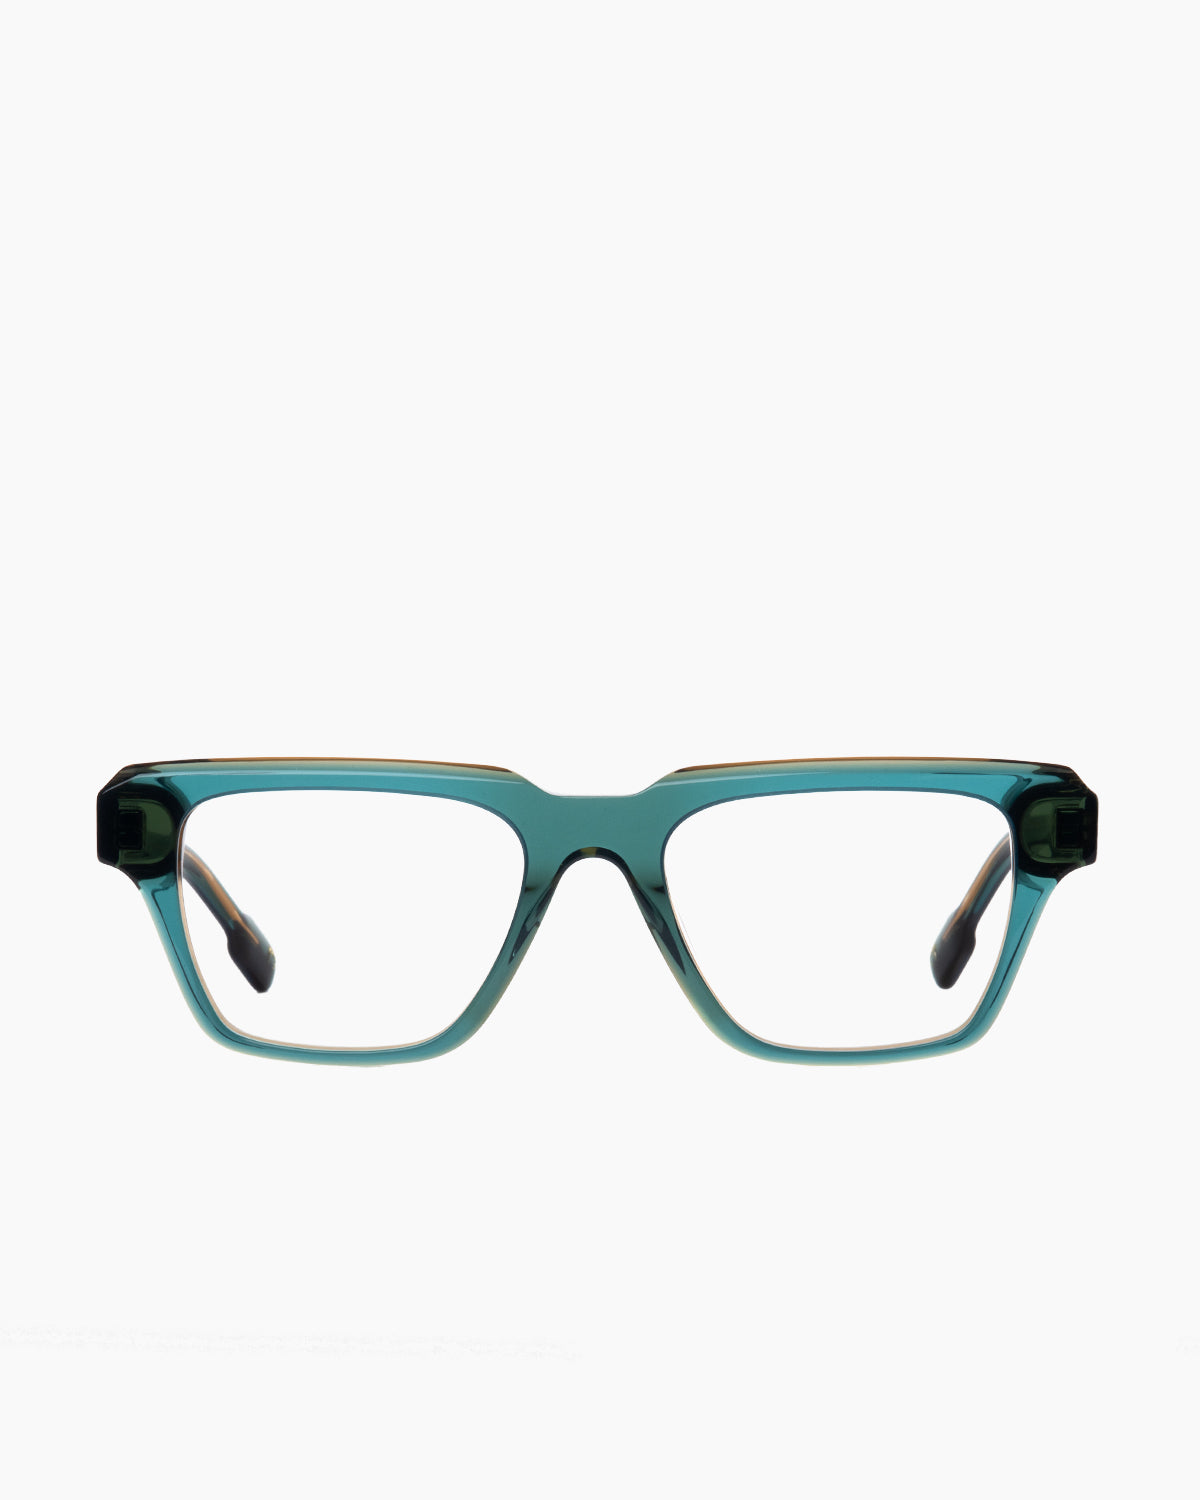 Spectacleeyeworks - Brad - c736 | Bar à lunettes:  Marie-Sophie Dion